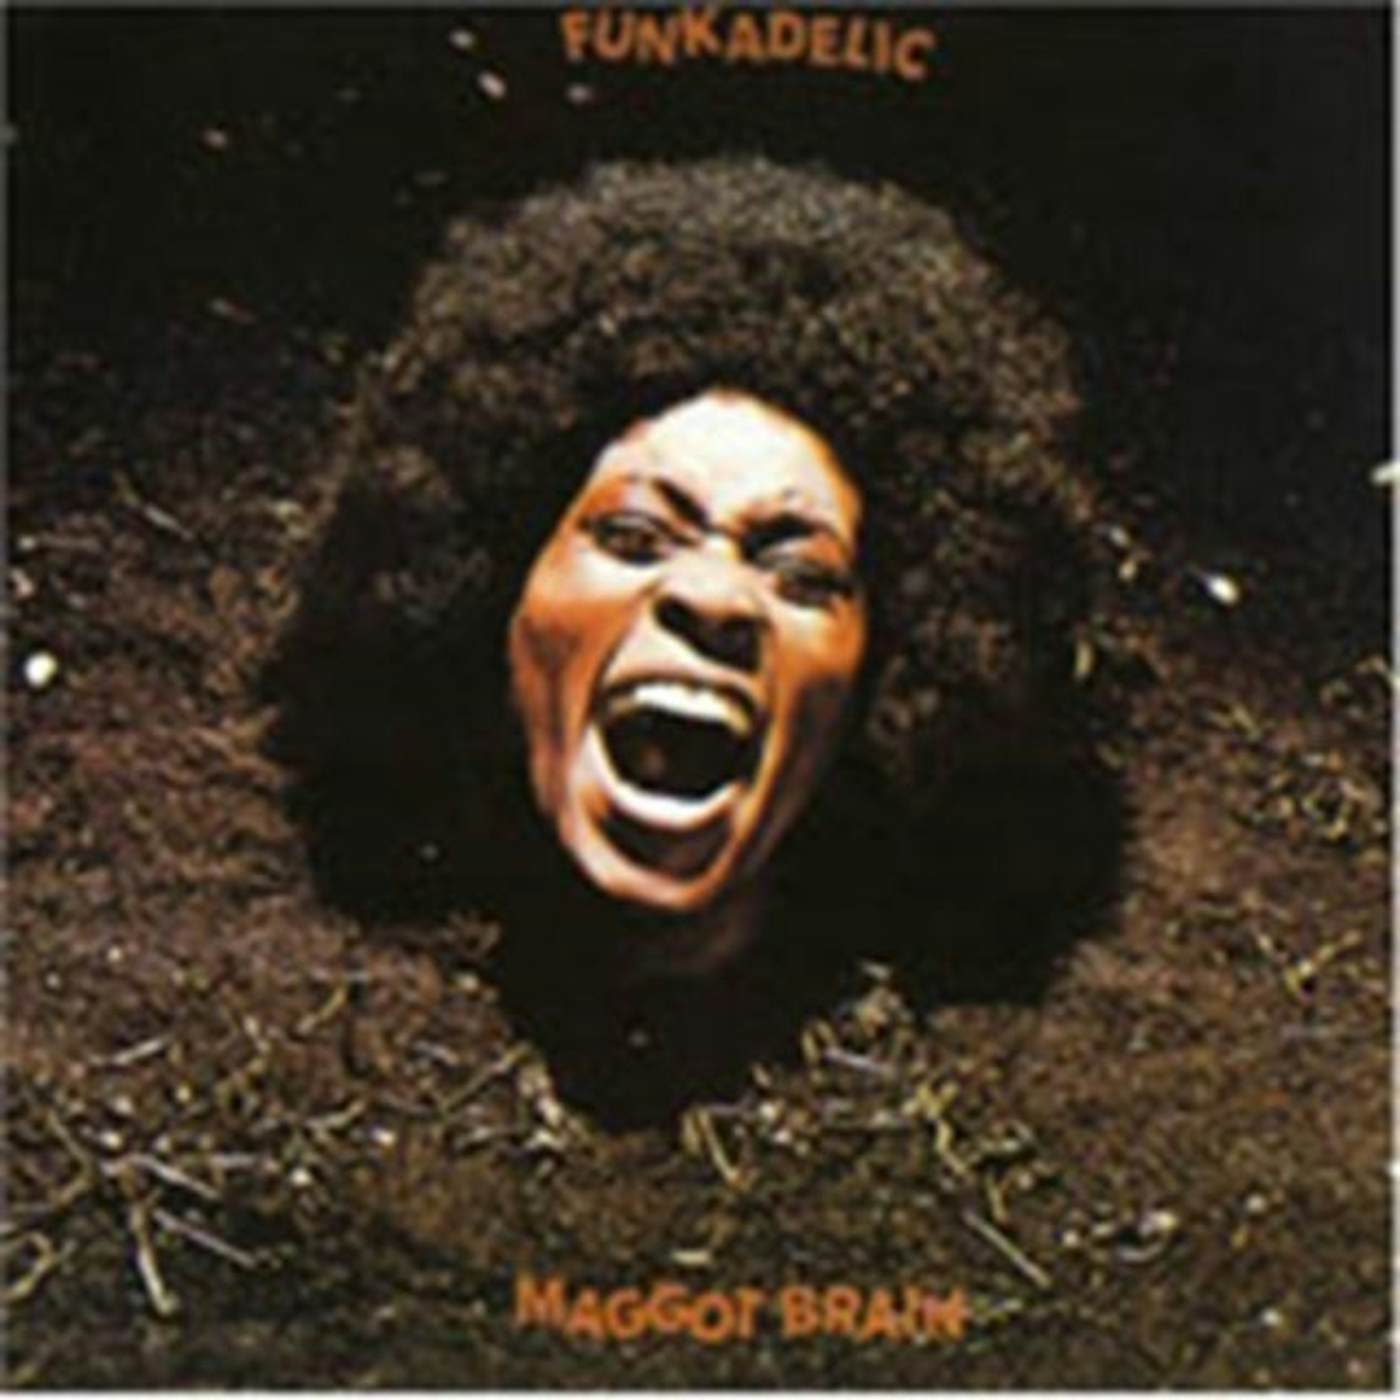 Funkadelic CD - Maggot Brain